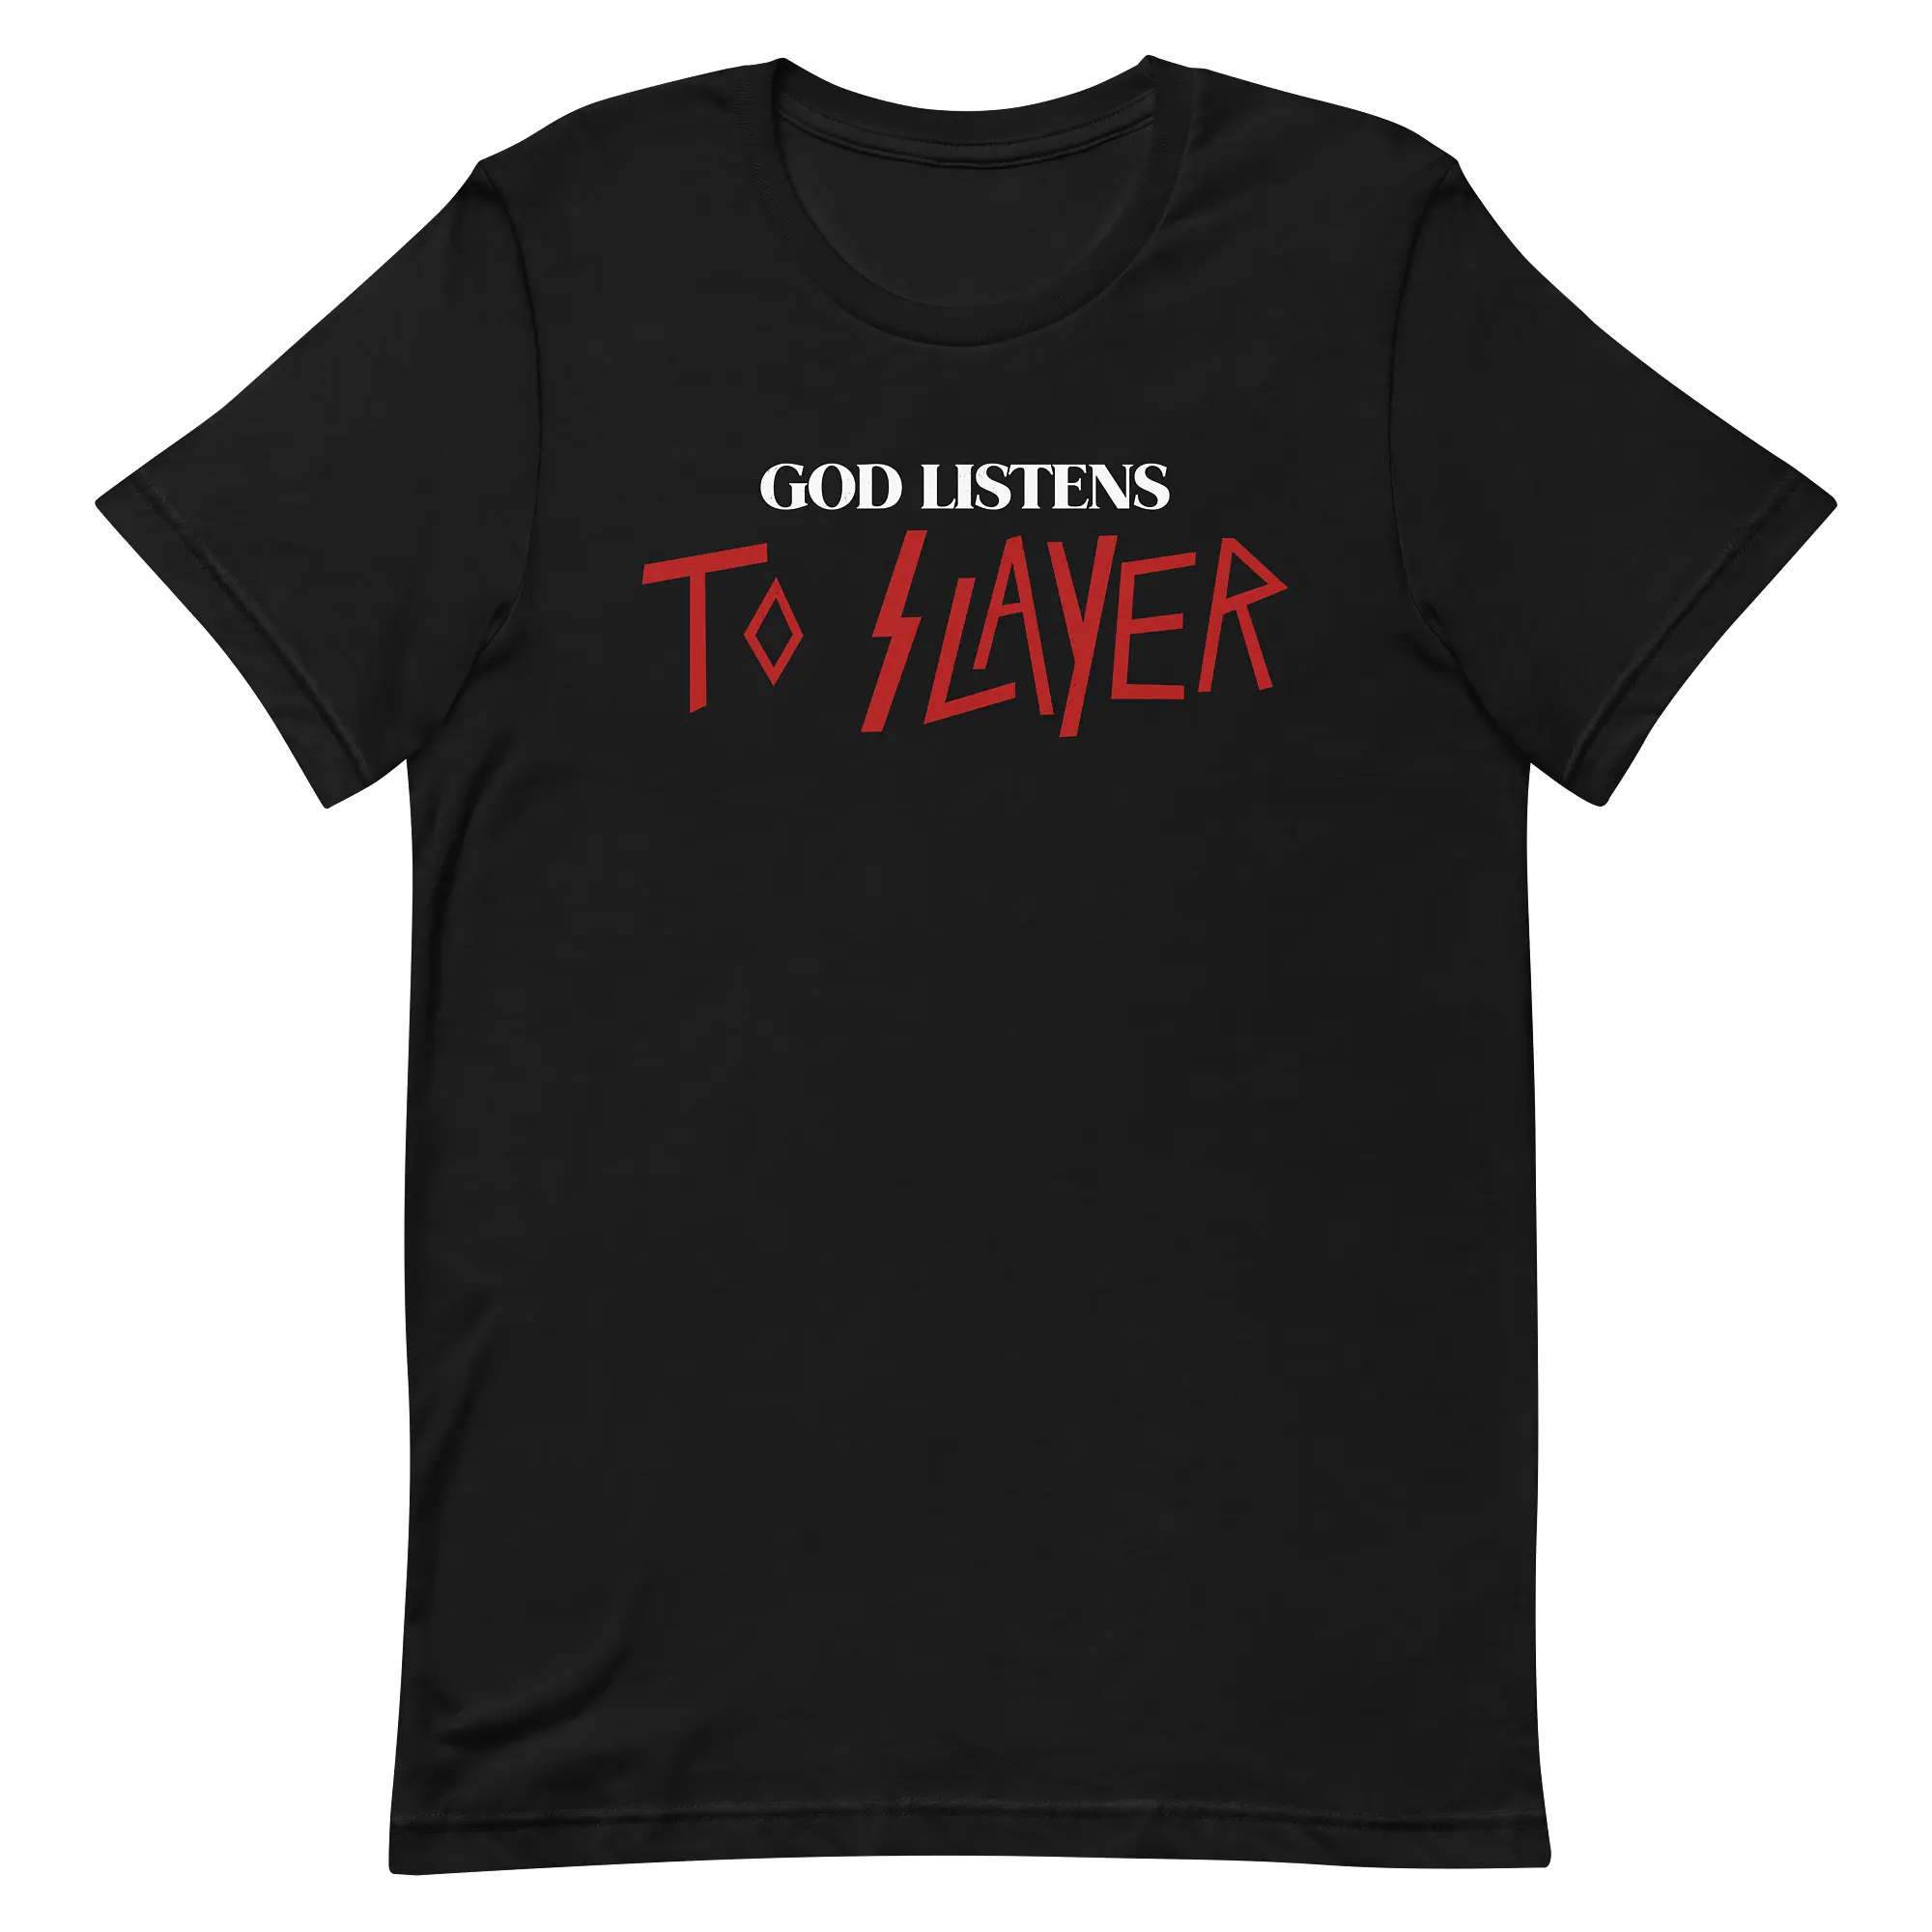 Sinful “God Listens To Slayer” tee